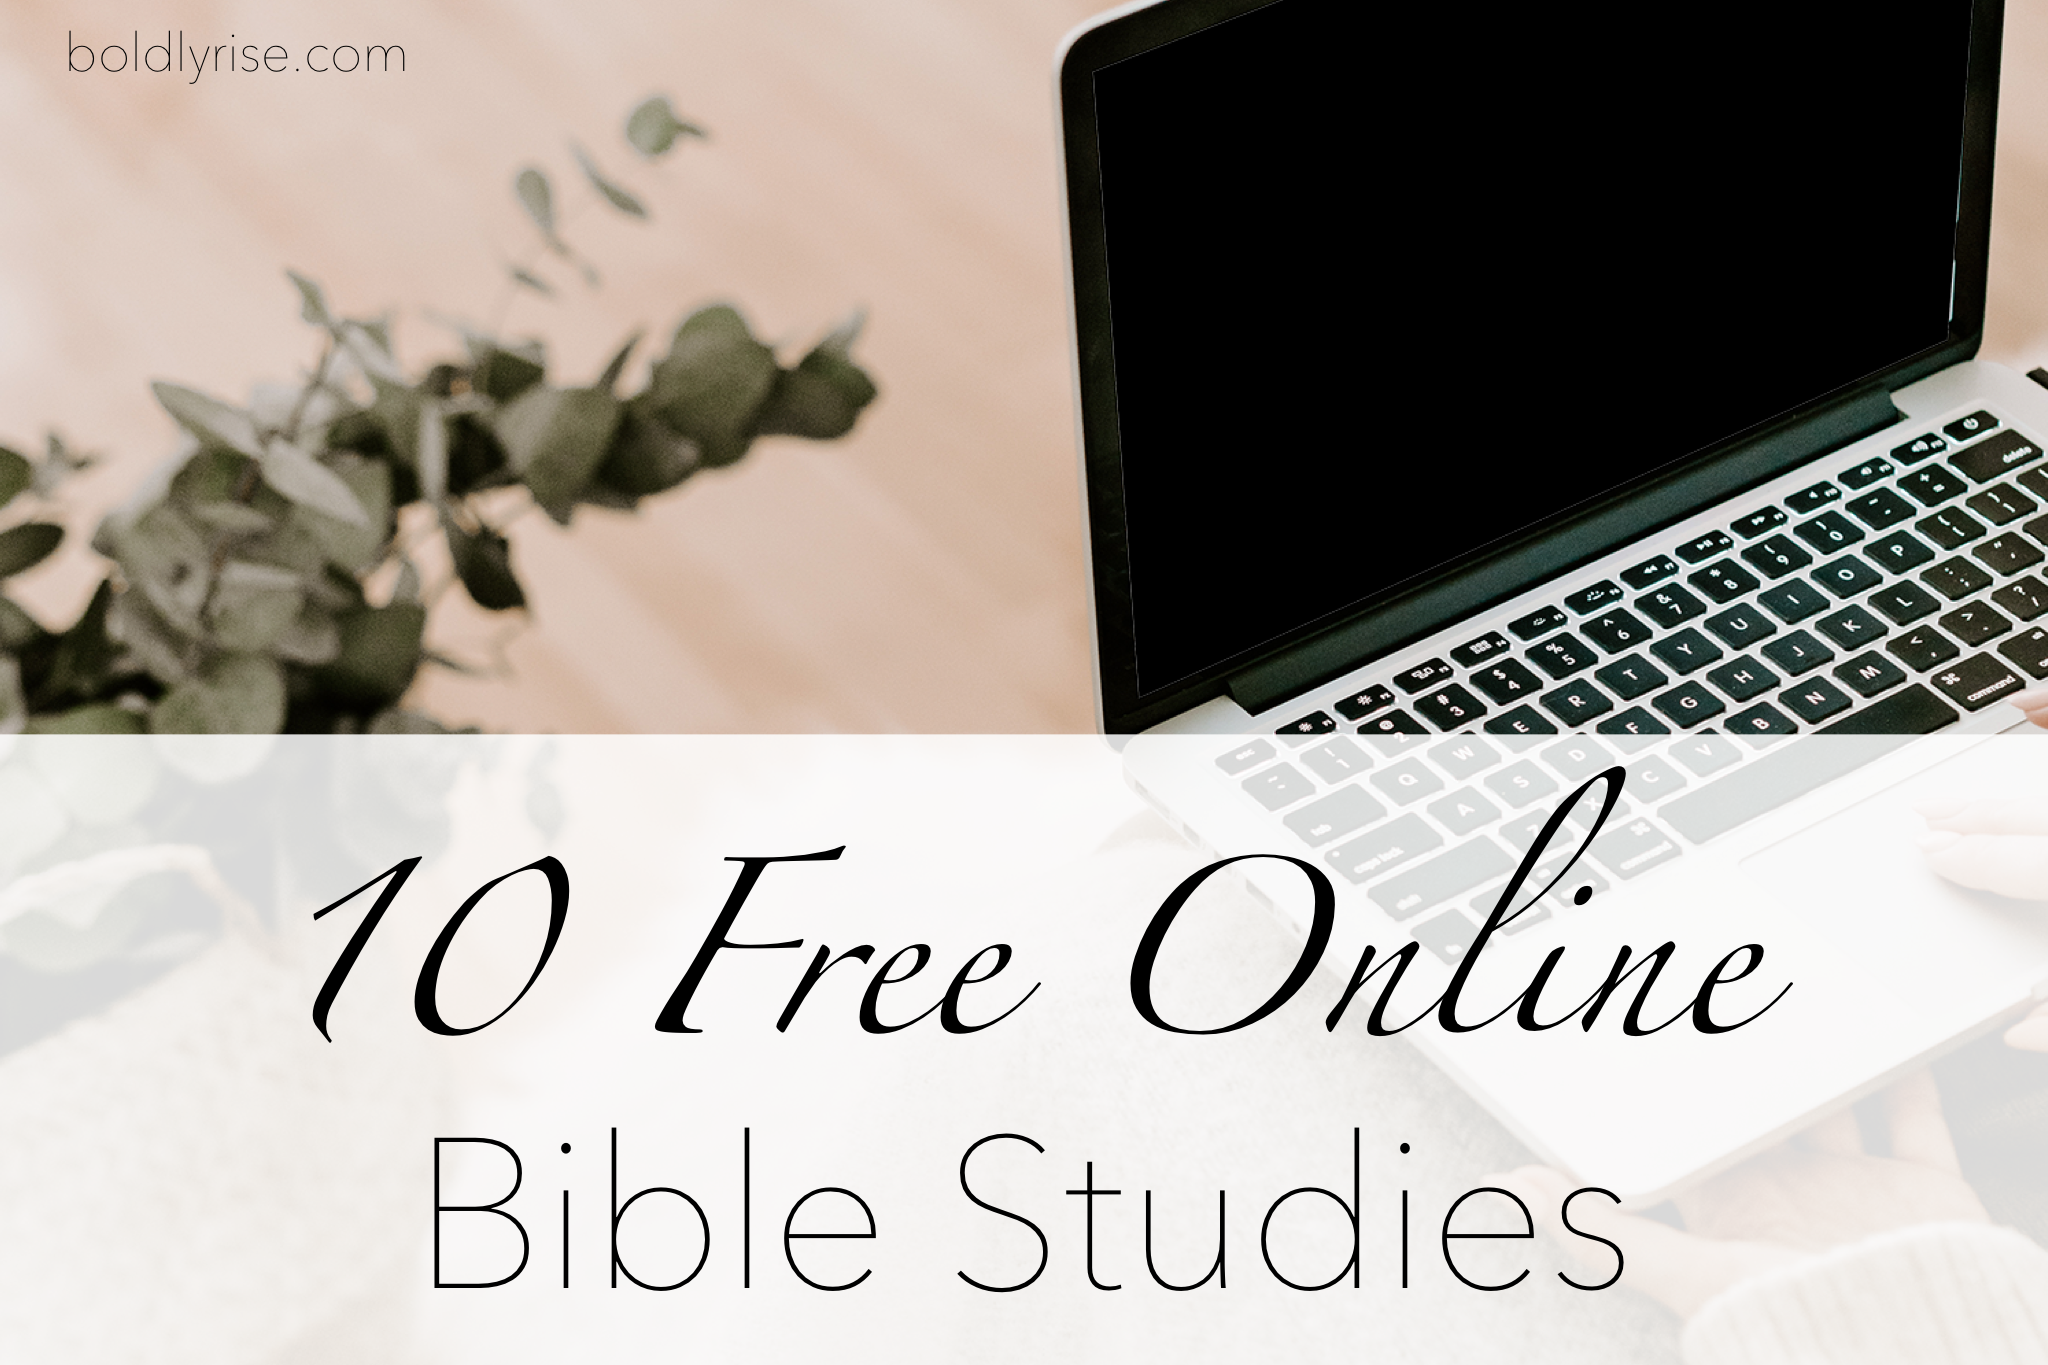 free online bible studies image with laptop